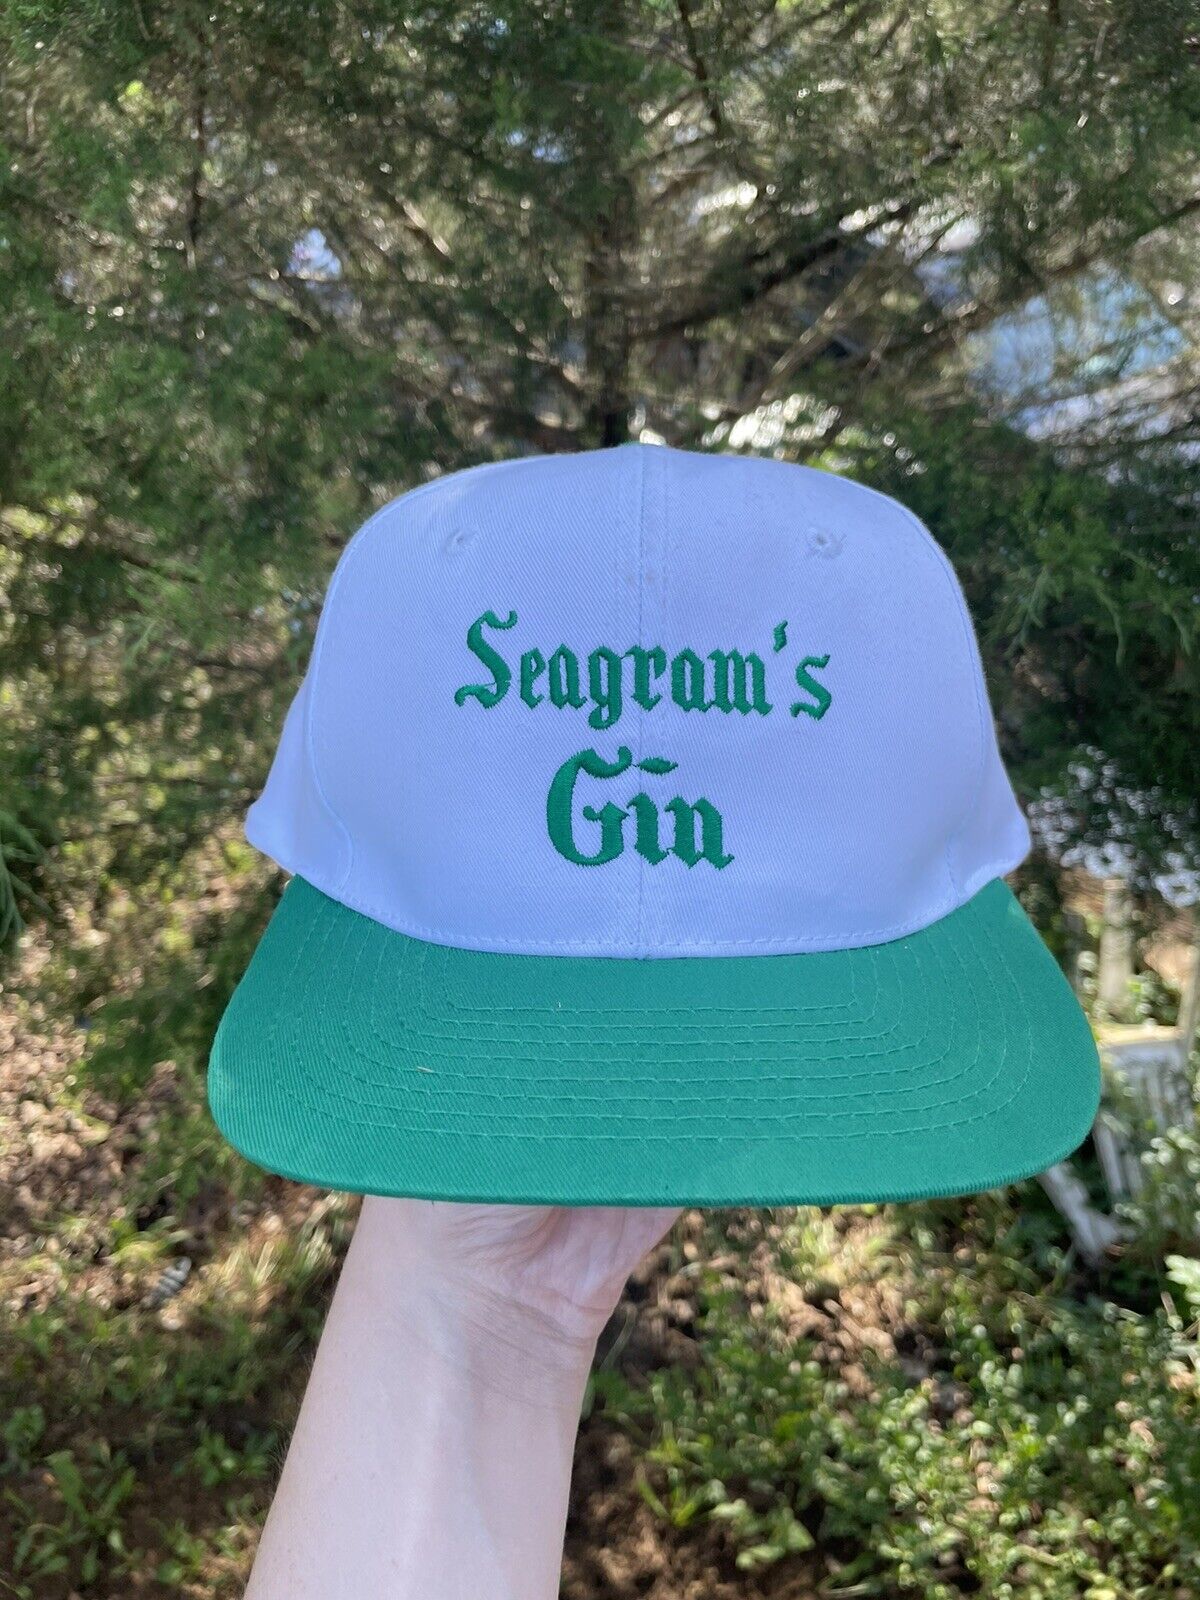 Vintage 90s Seagrams Gin Hat